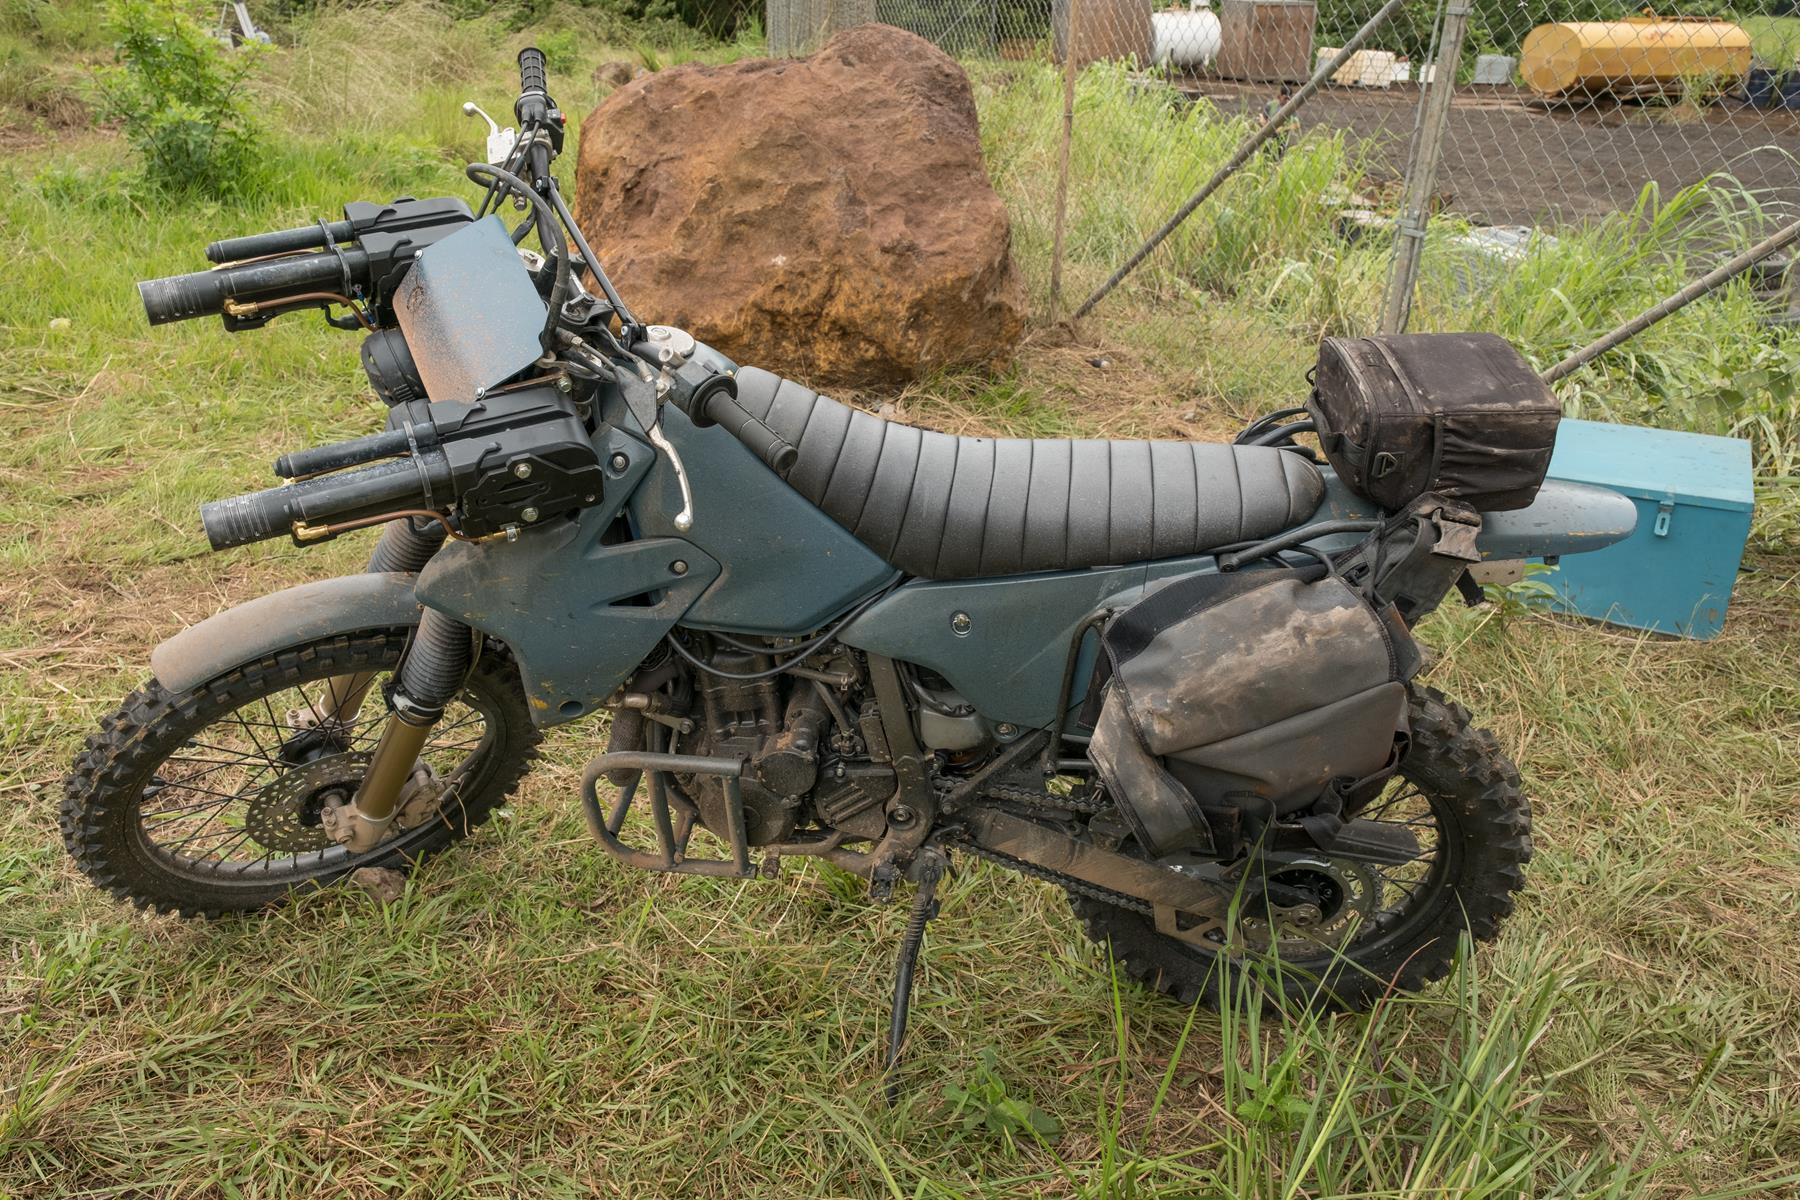 Jumanji Motorcycle